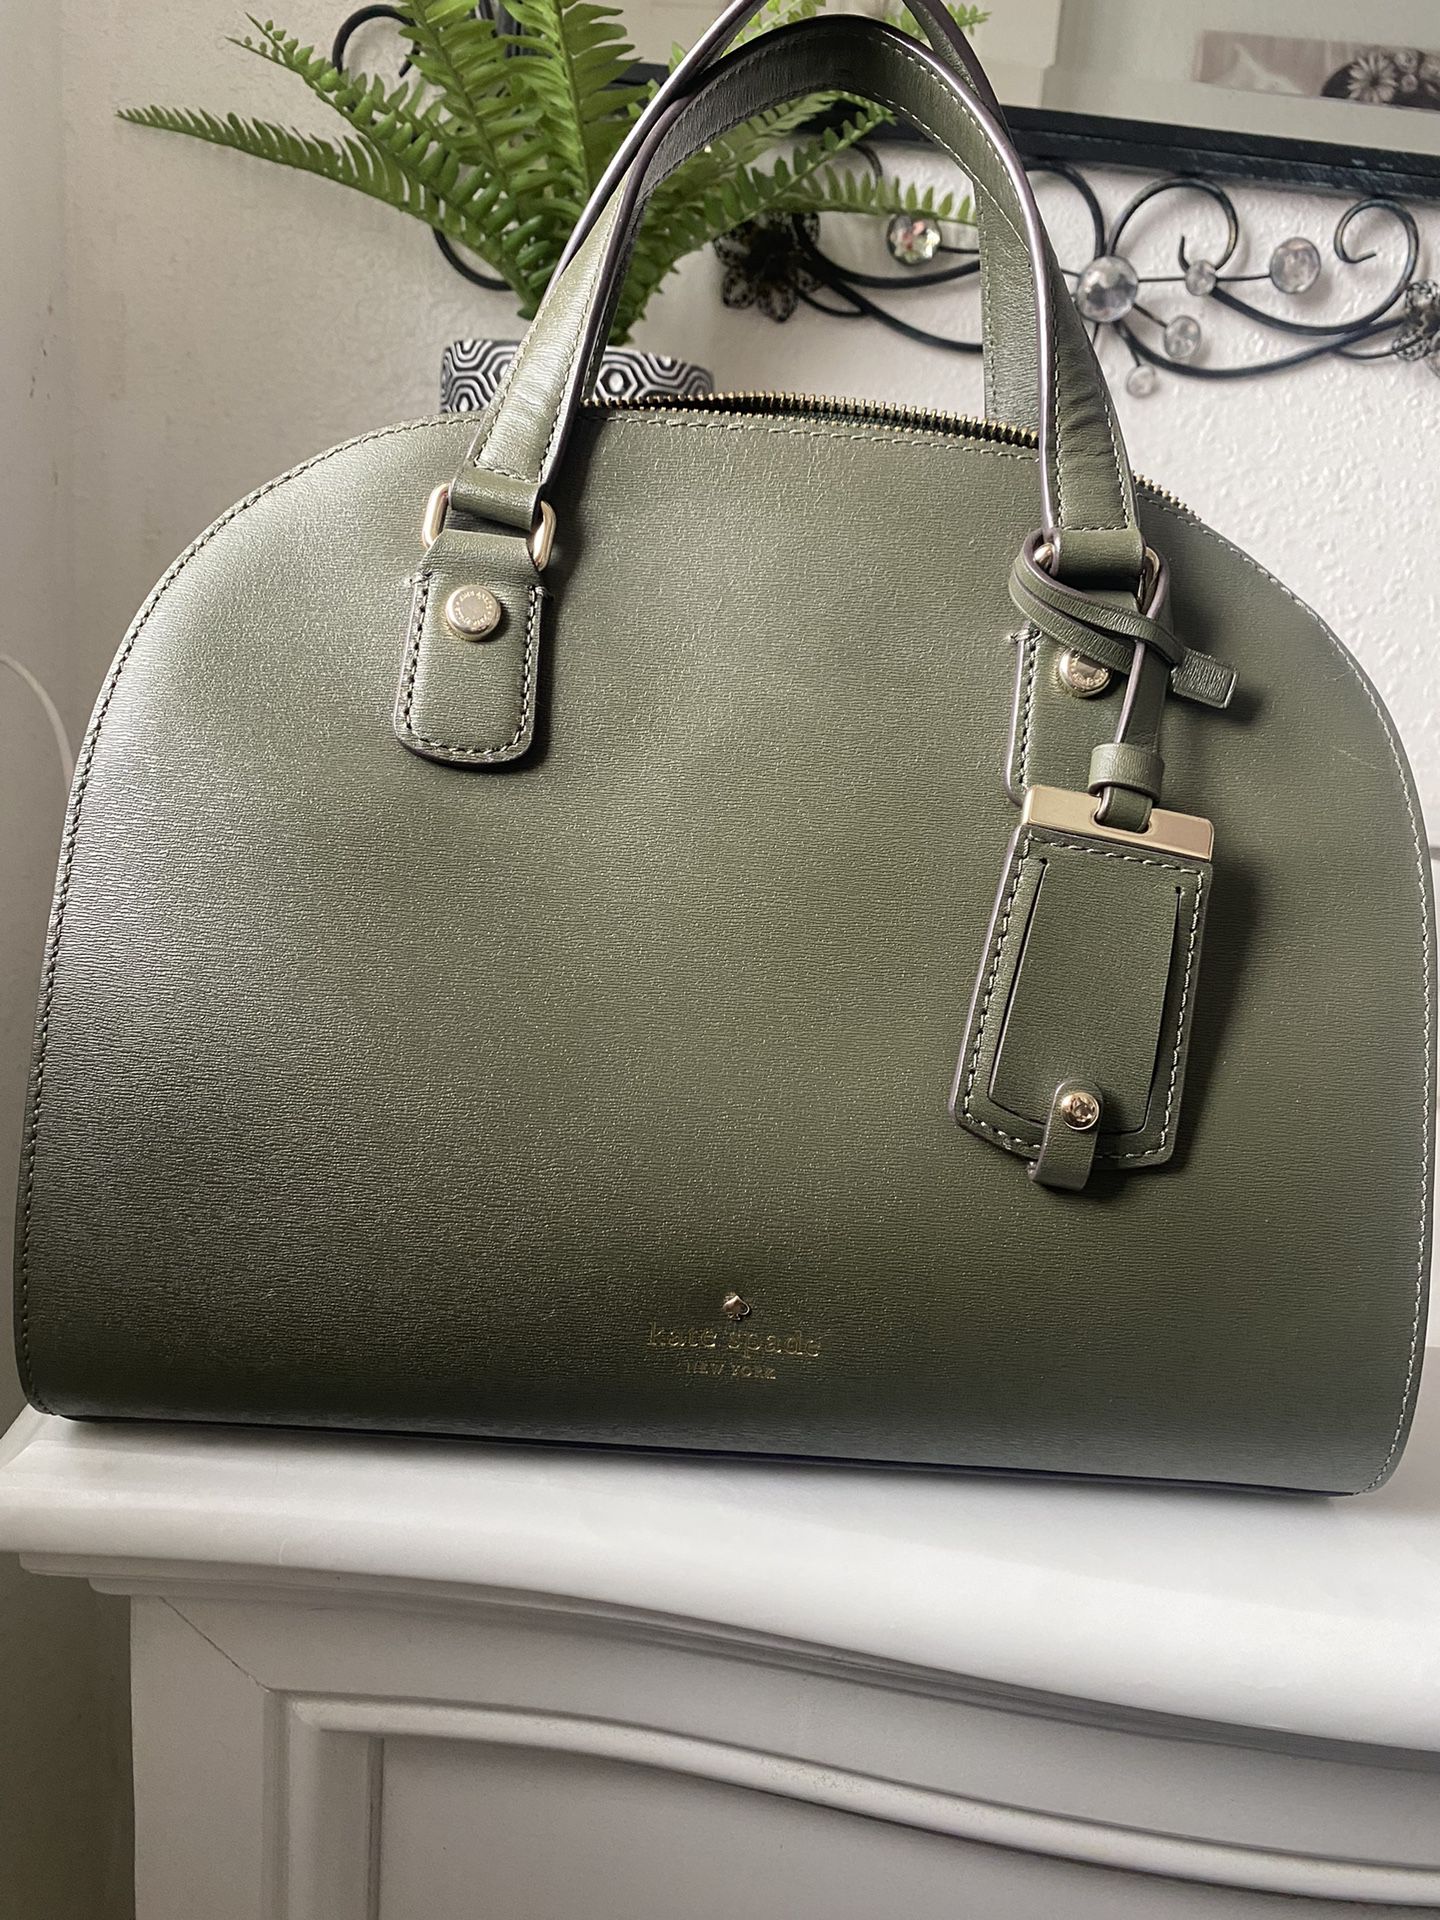 Olive Kate Spade Dome handbag